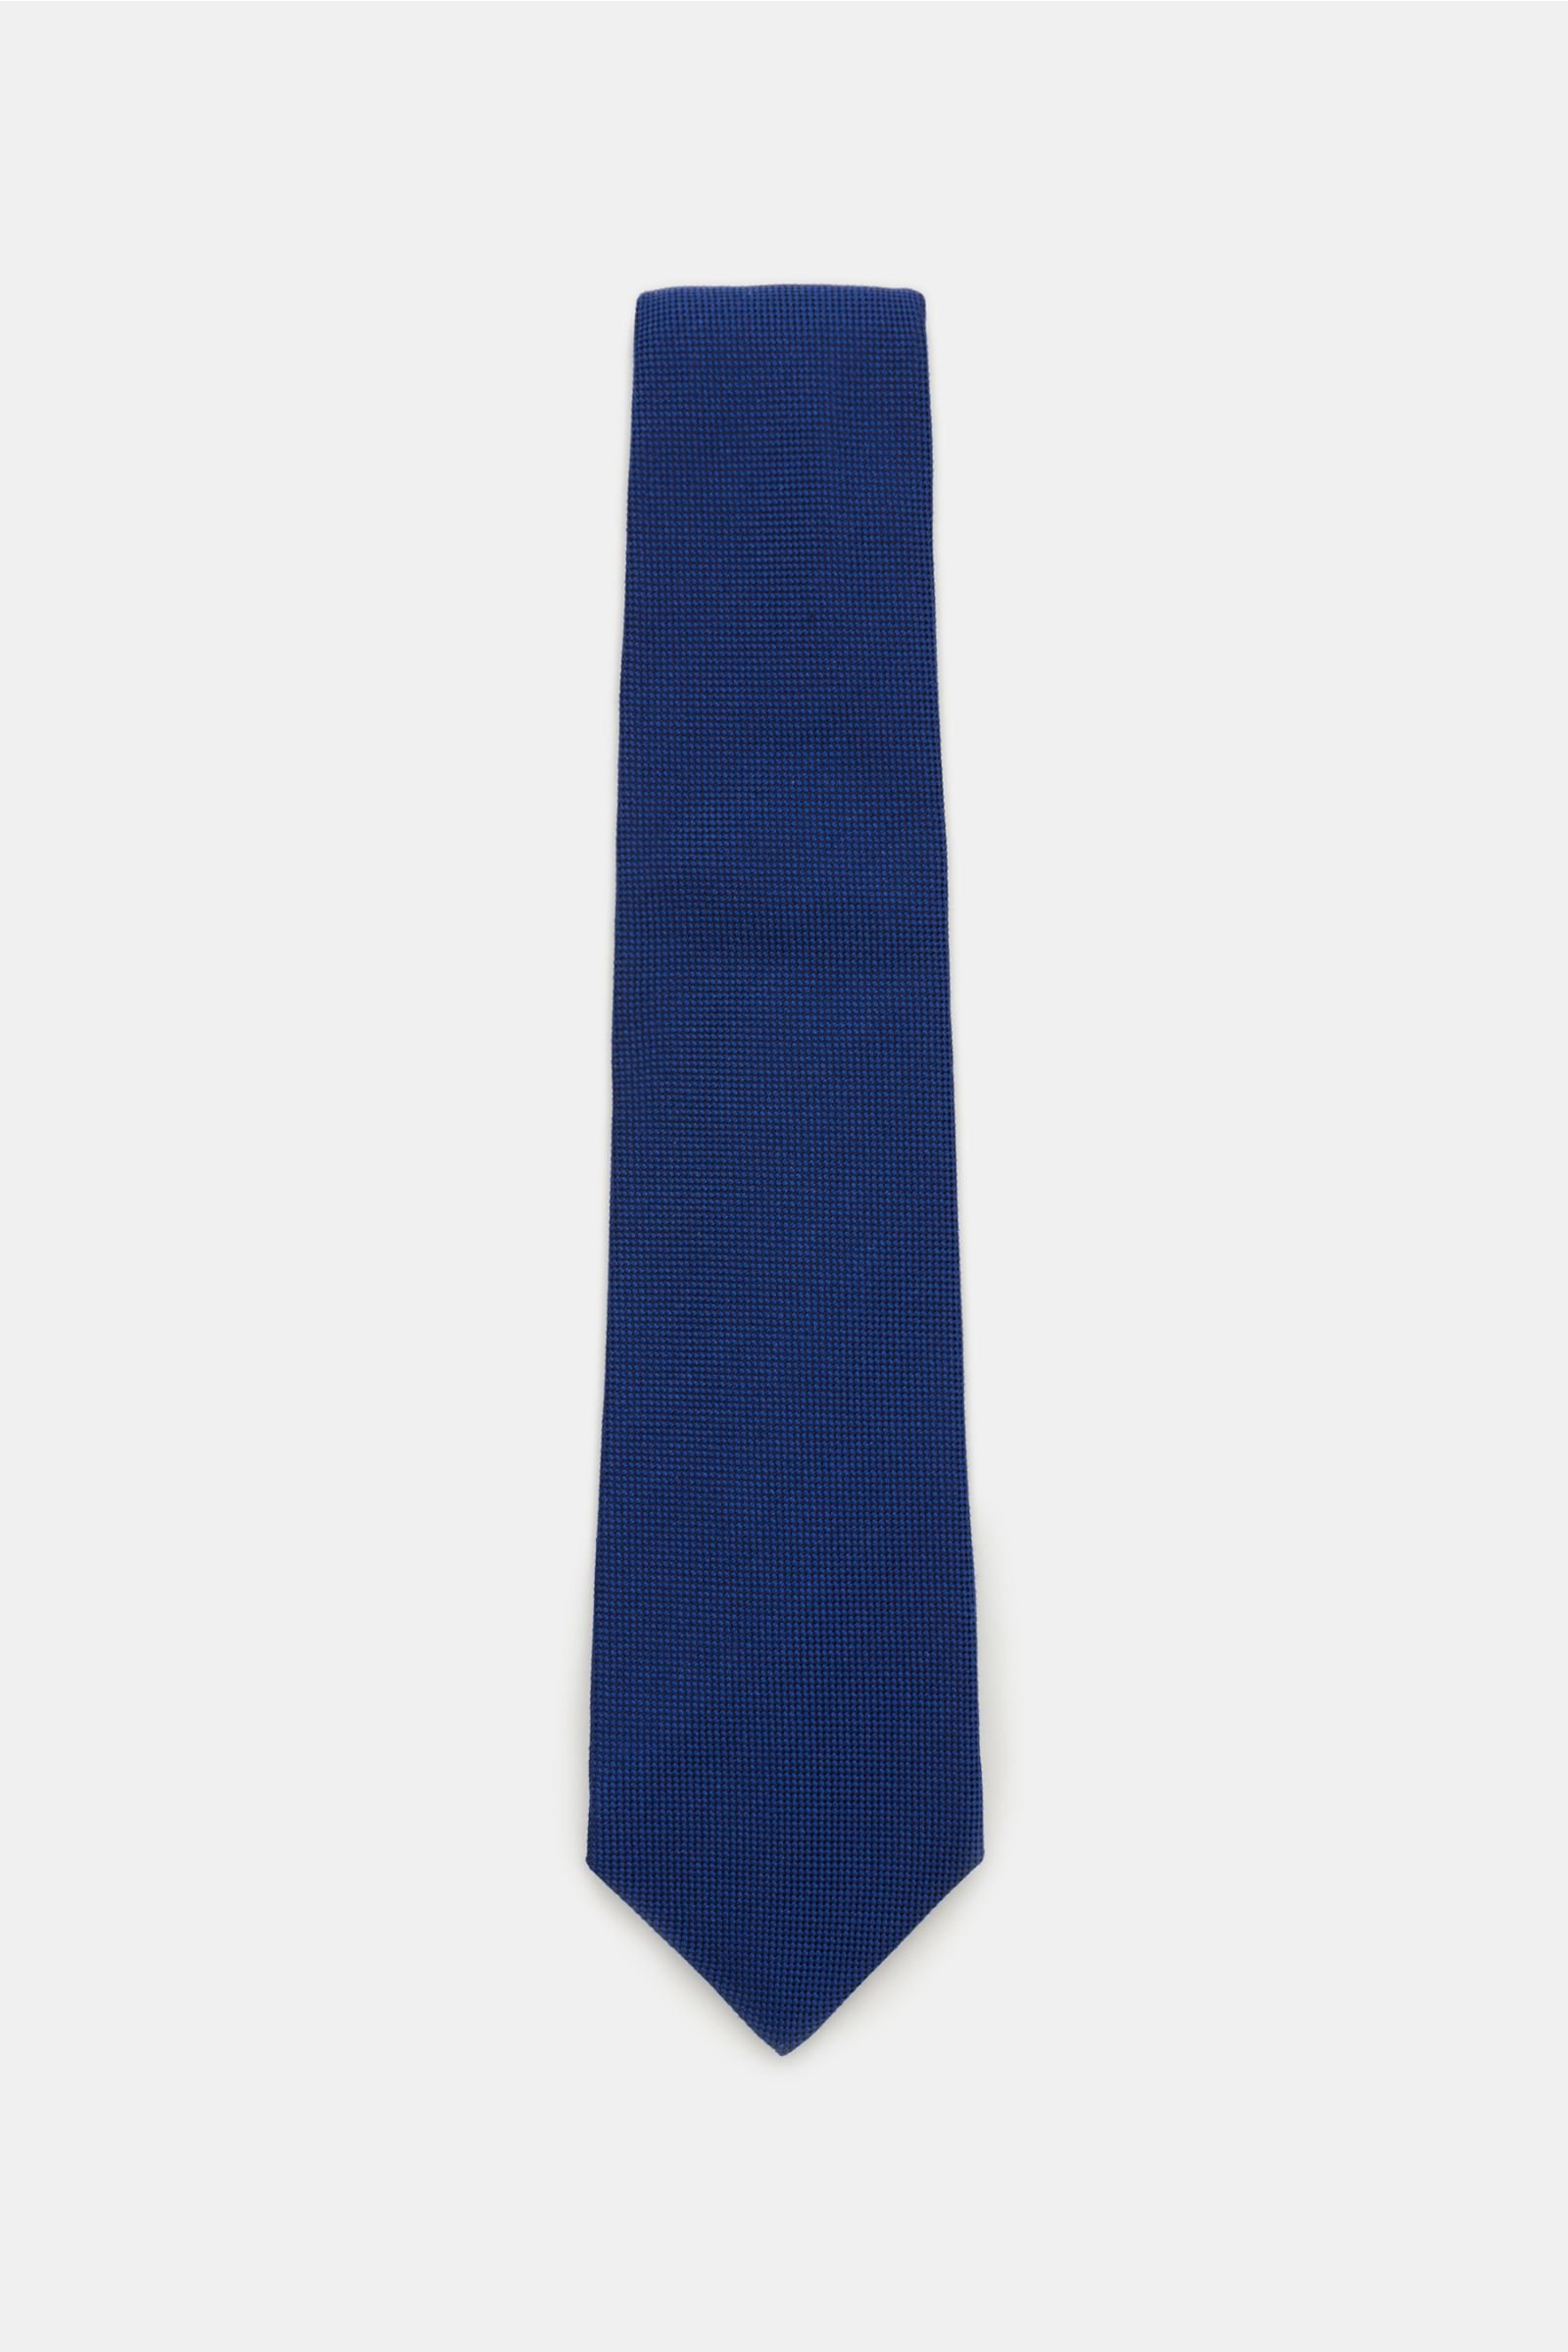 Silk tie grey-blue/navy patterned